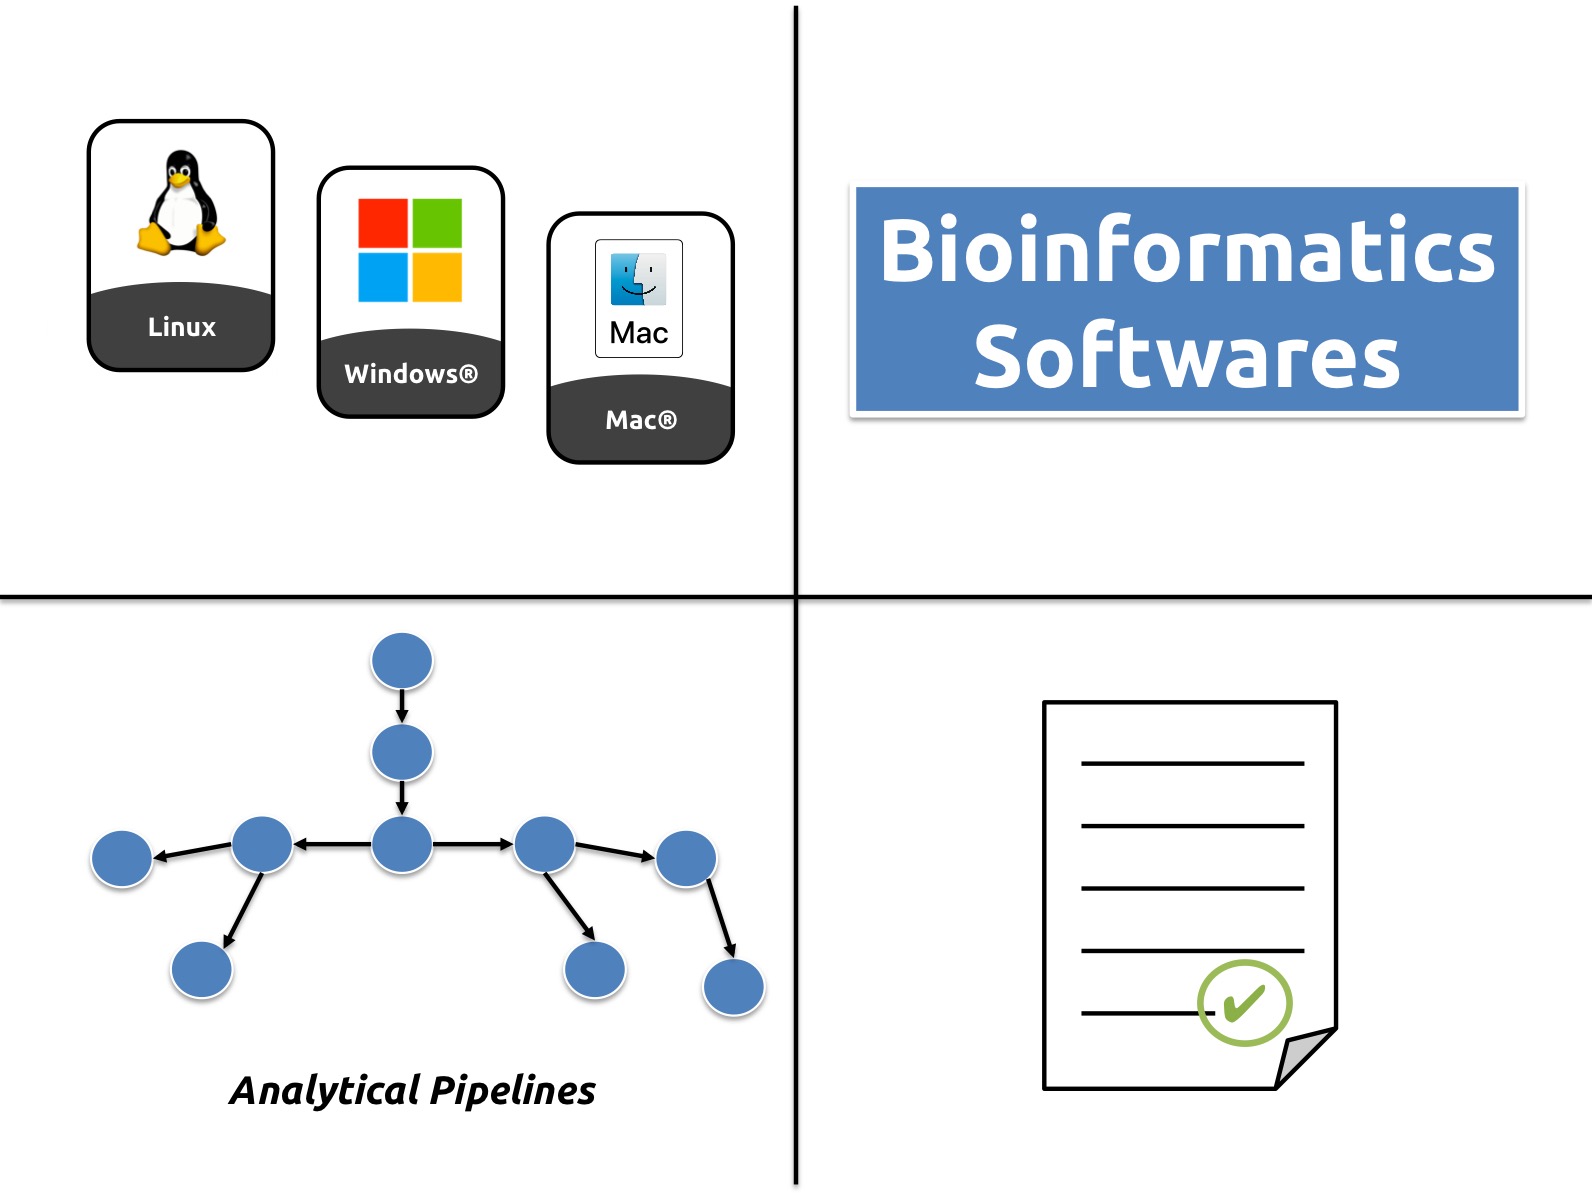 bioinformatics softwares